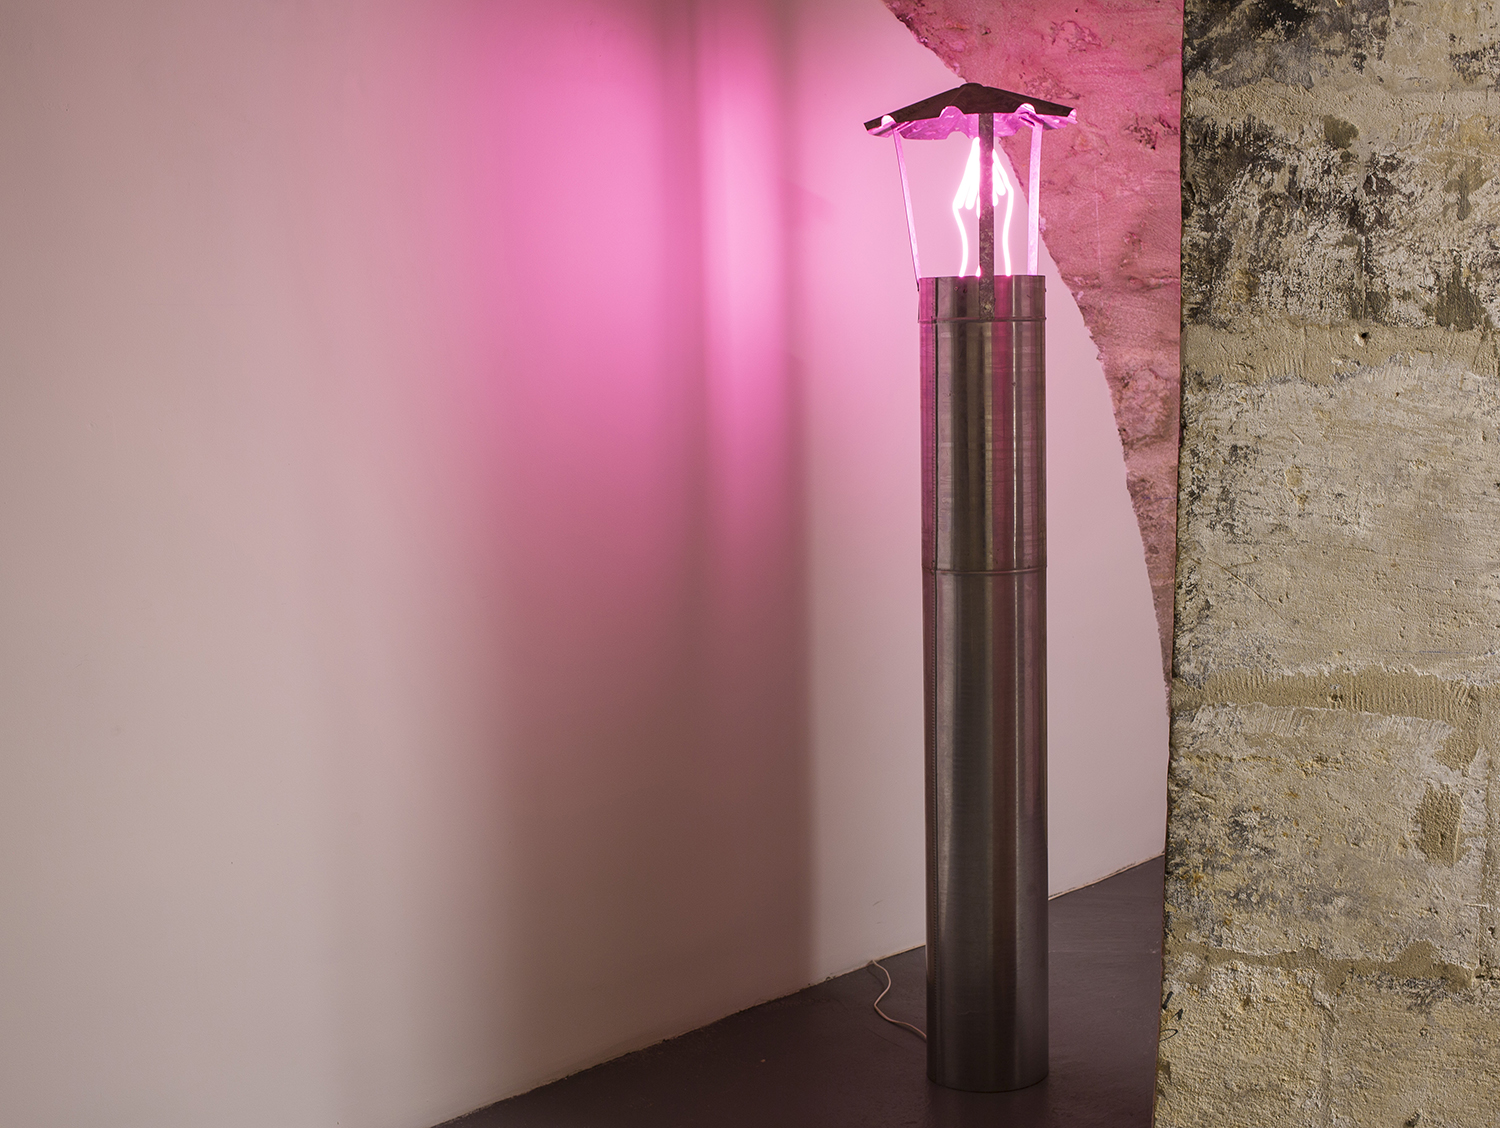 Pierre Petit, Jalousie, 1995, neon, aluminium chimney stack, 174 x 22 cm.